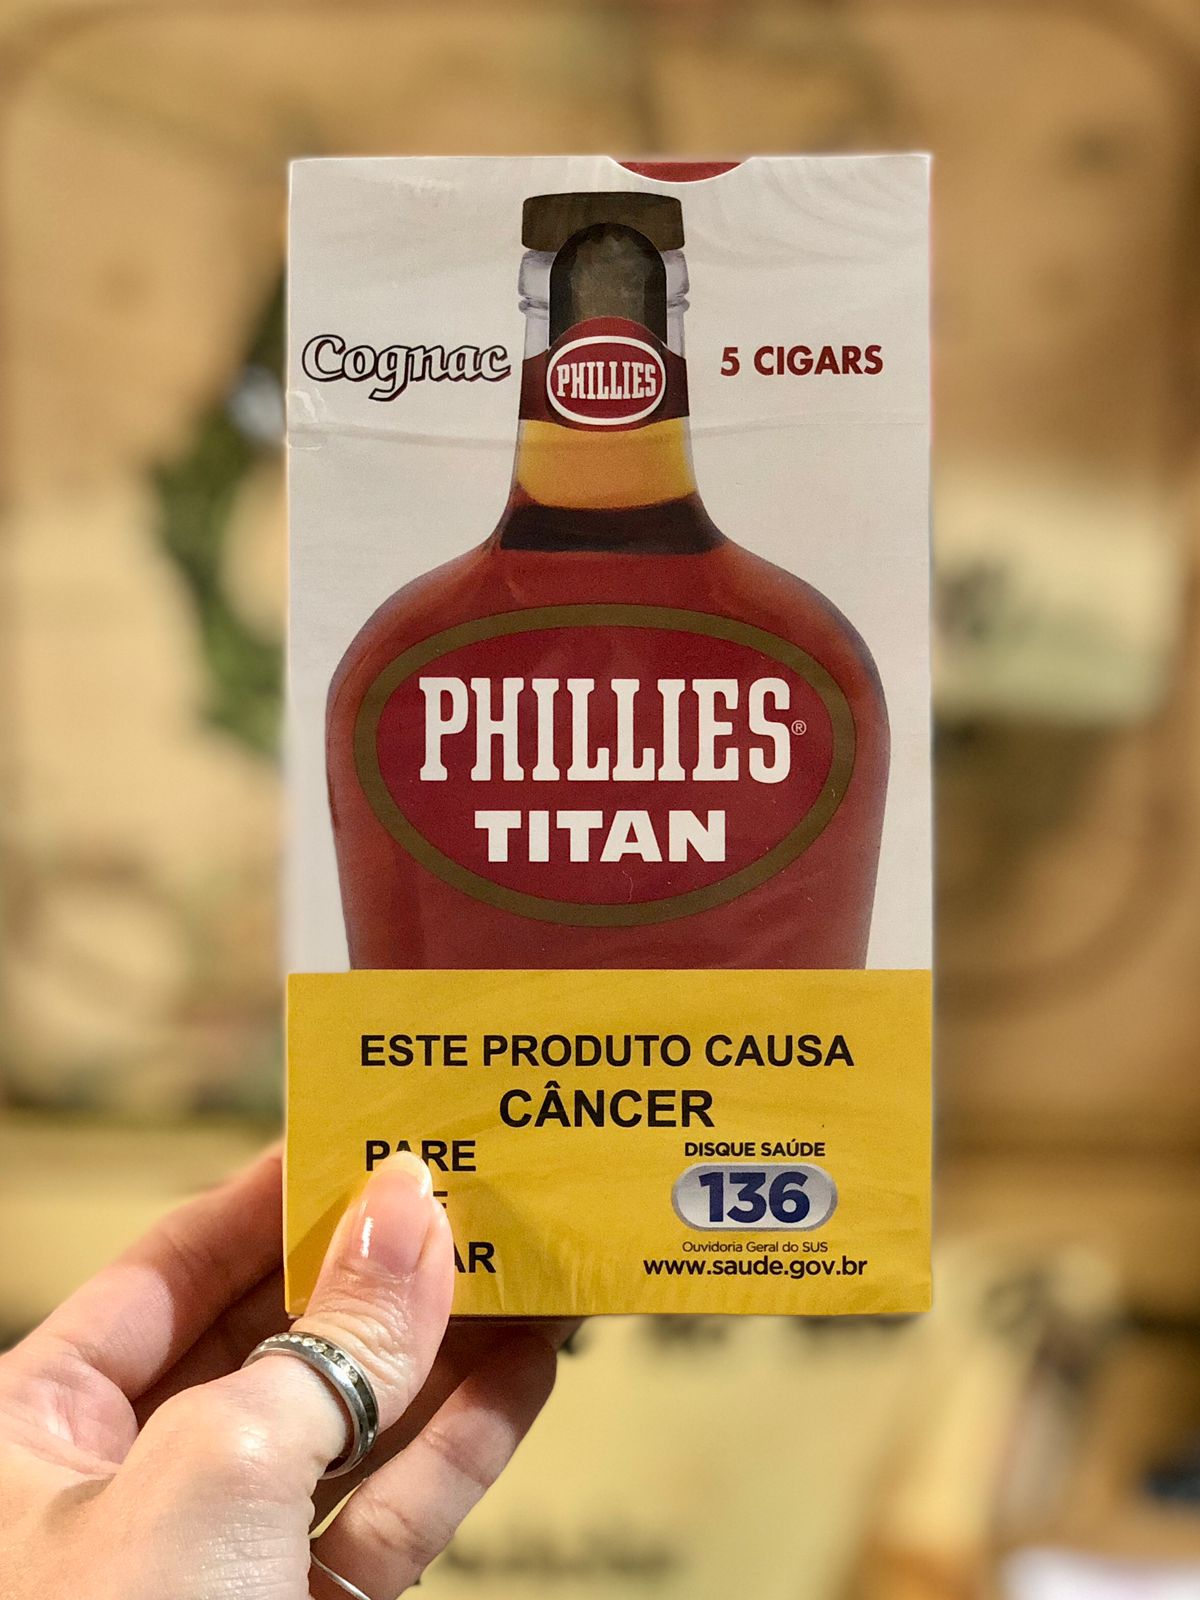 PHILLIES TITAN - COGNAC